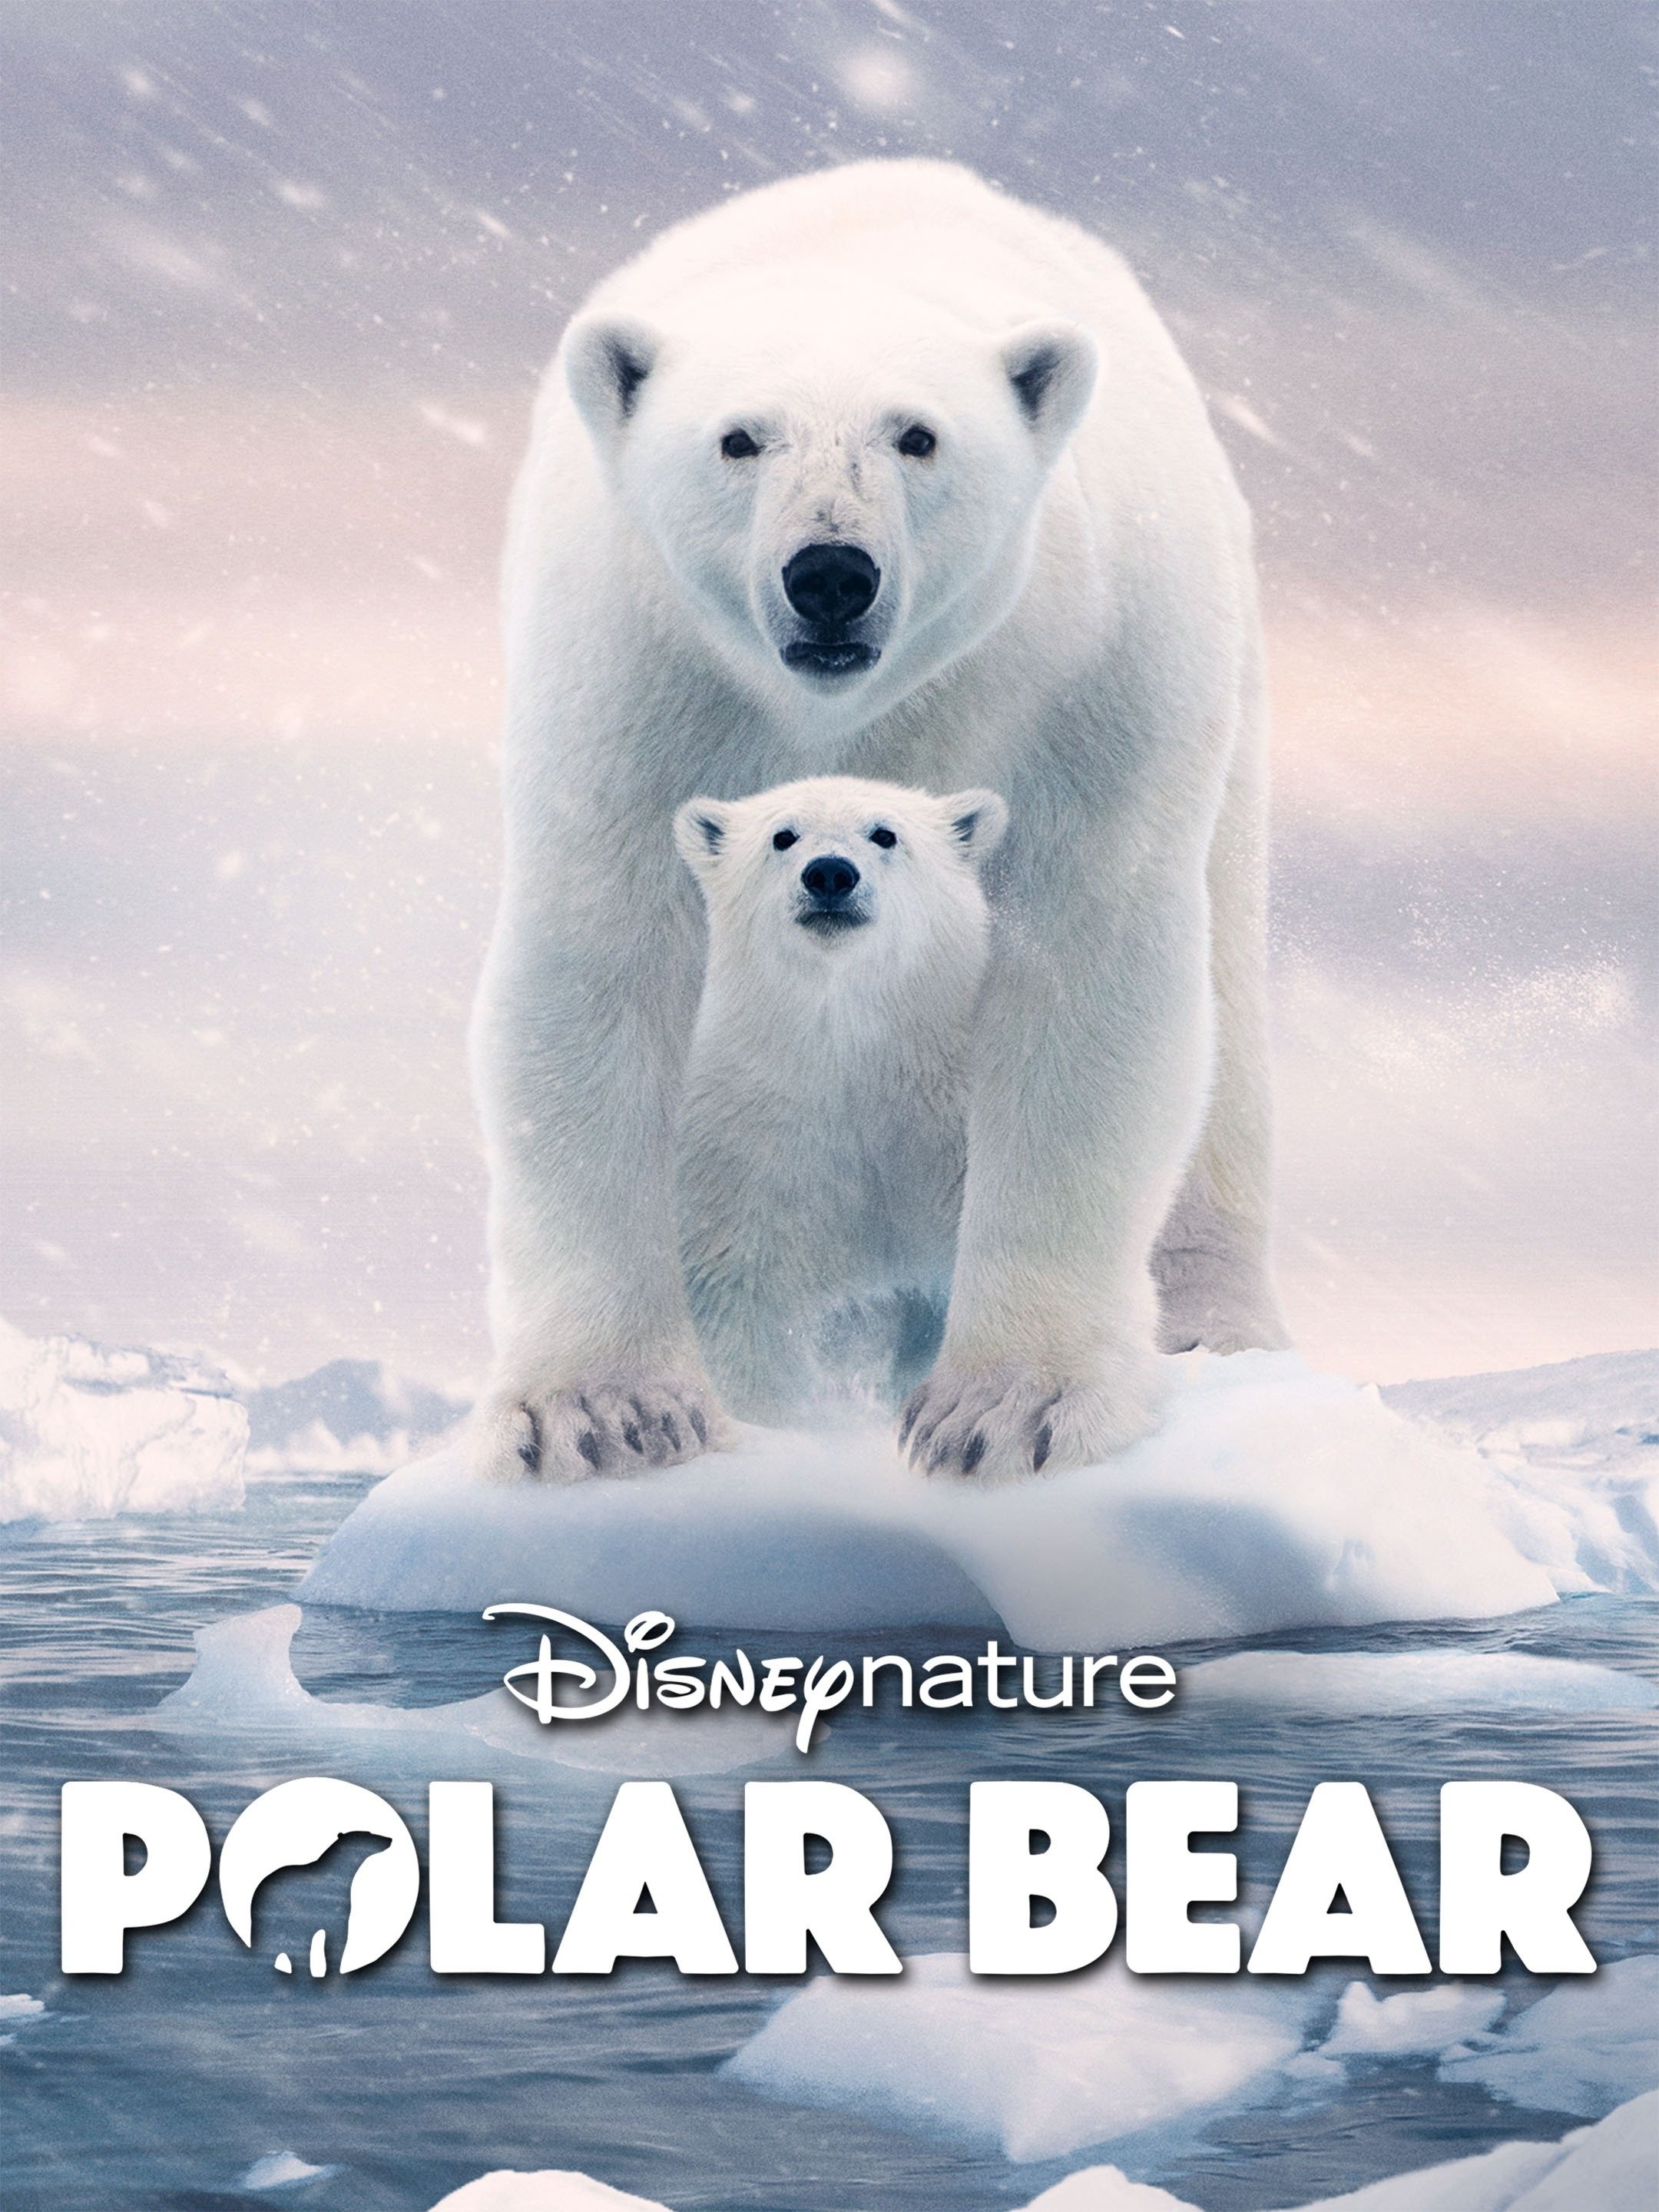 Polar Bear Movie Review